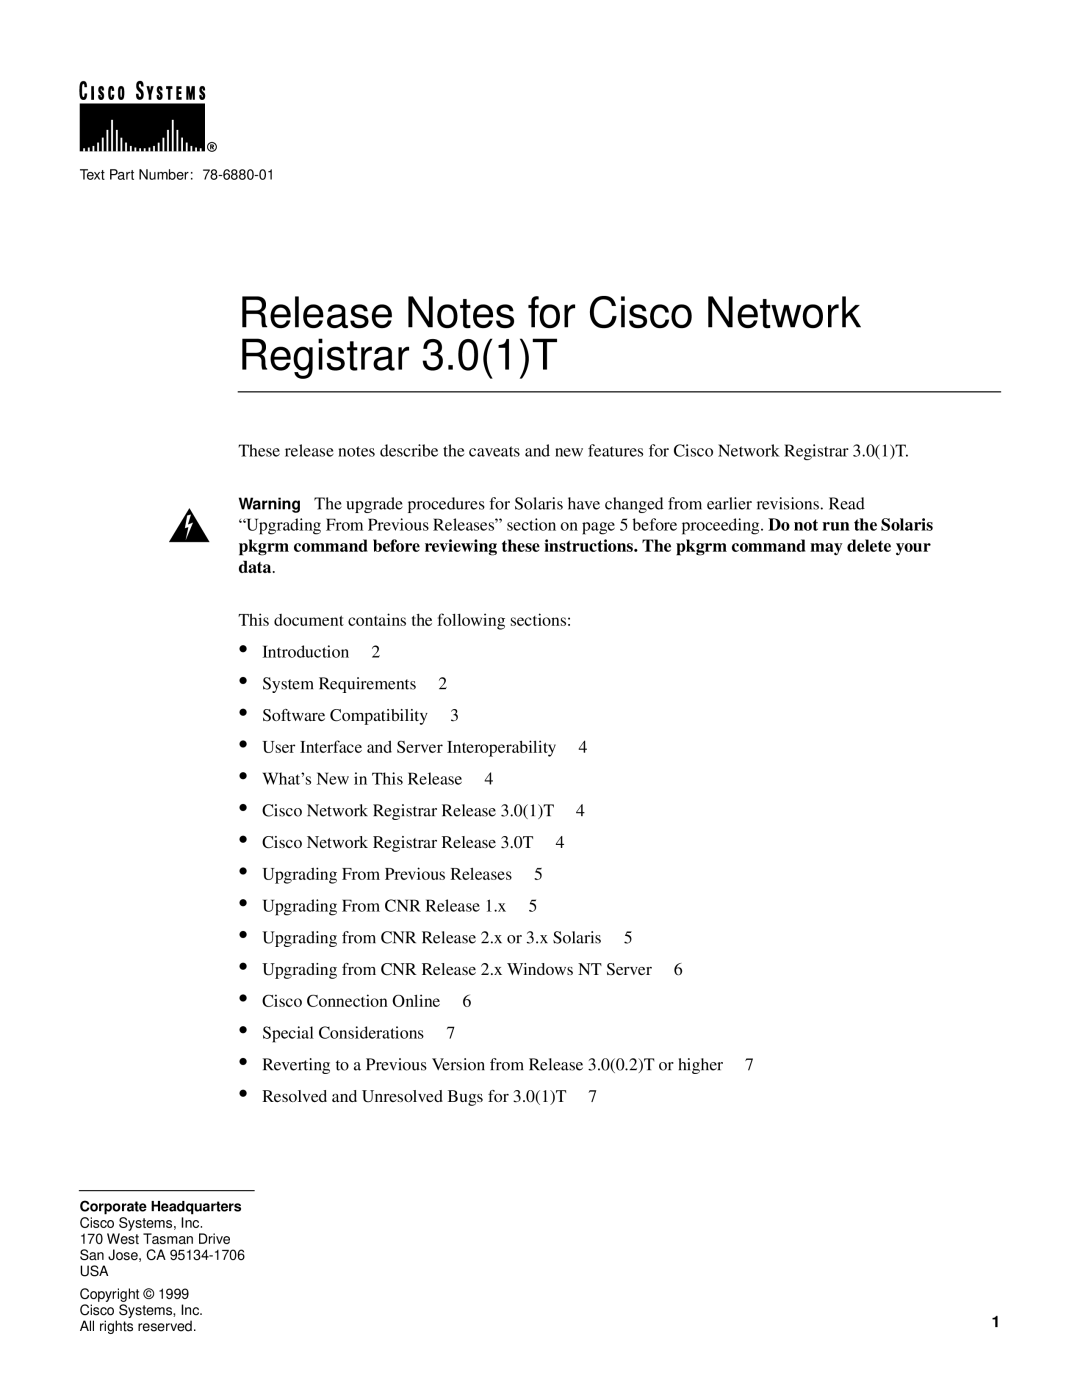 Cisco Systems 3.0(1) manual data, Release Notes for Cisco Network Registrar 3.01T 